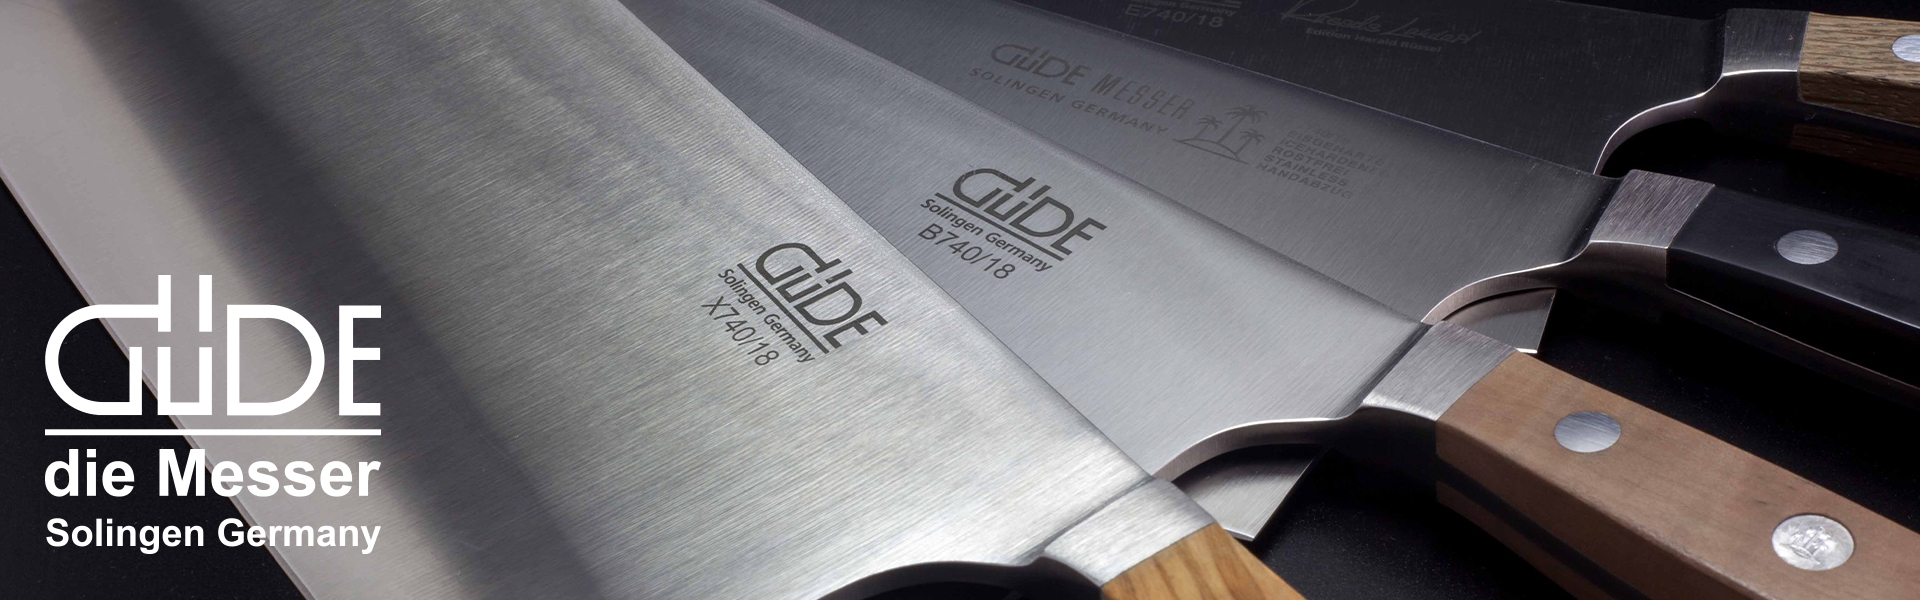 Güde - Die Messer - Made in Germany - Solingen